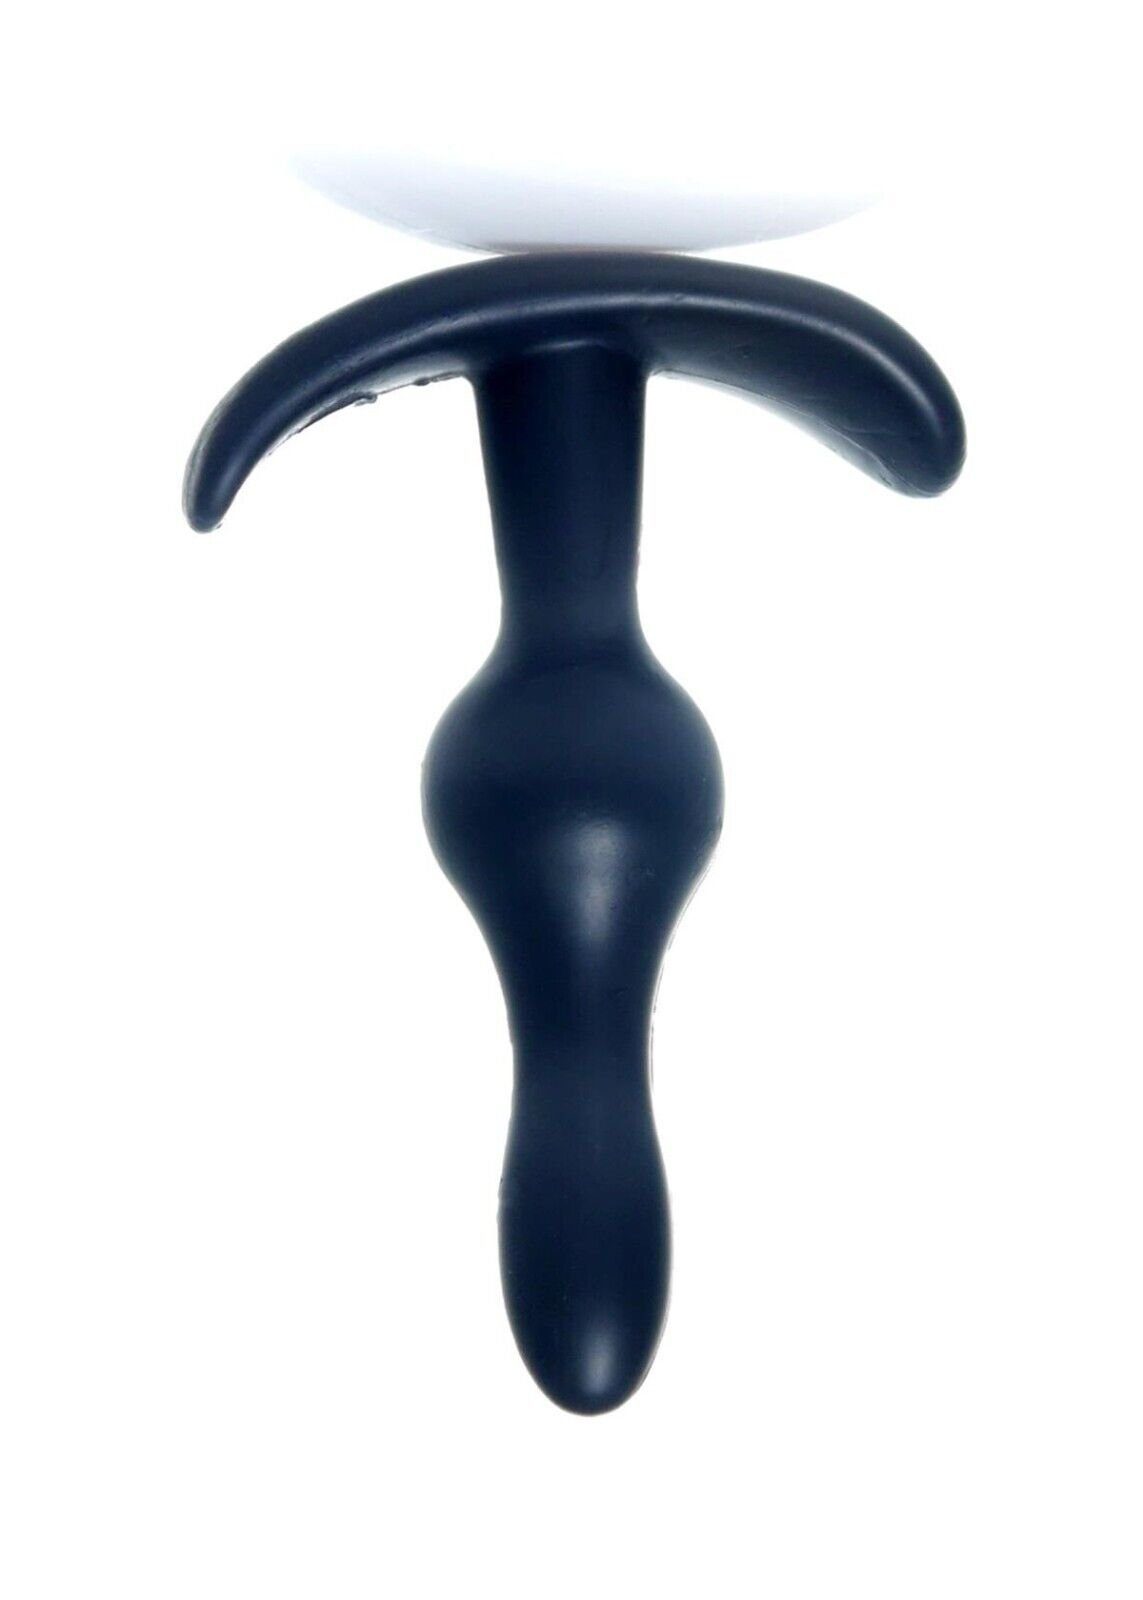 denu-shop Analplug Lang 9cm Plug Sexspielzeug Anal Stöpsel Schwarz in T-Plug Anal